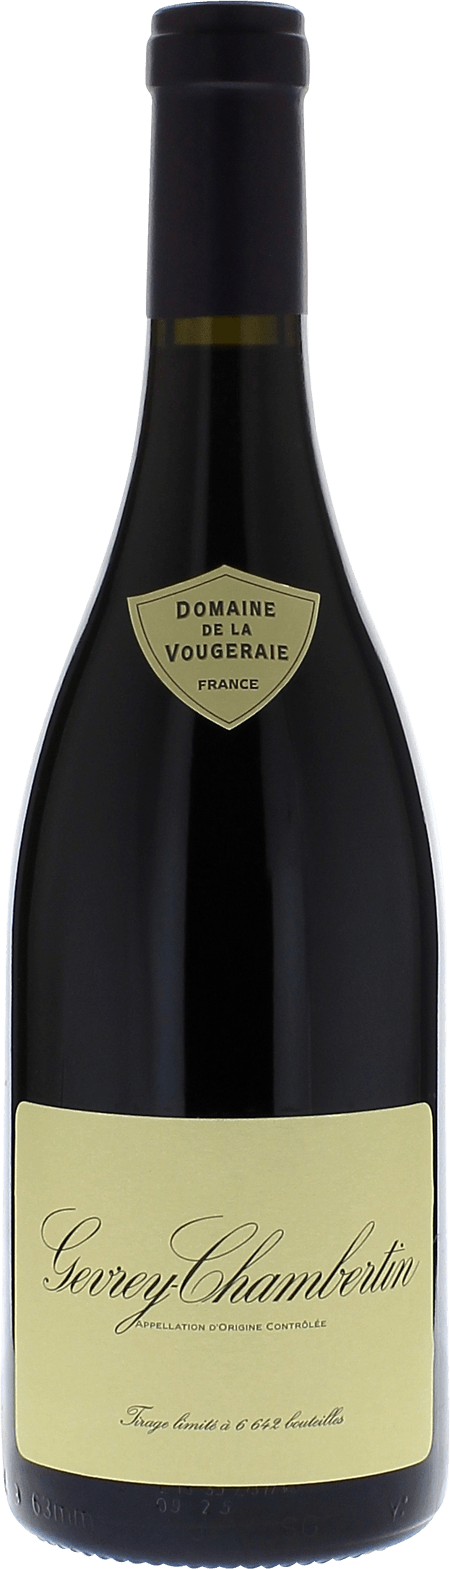 Gevrey chambertin 2017 Domaine VOUGERAIE, Bourgogne rouge